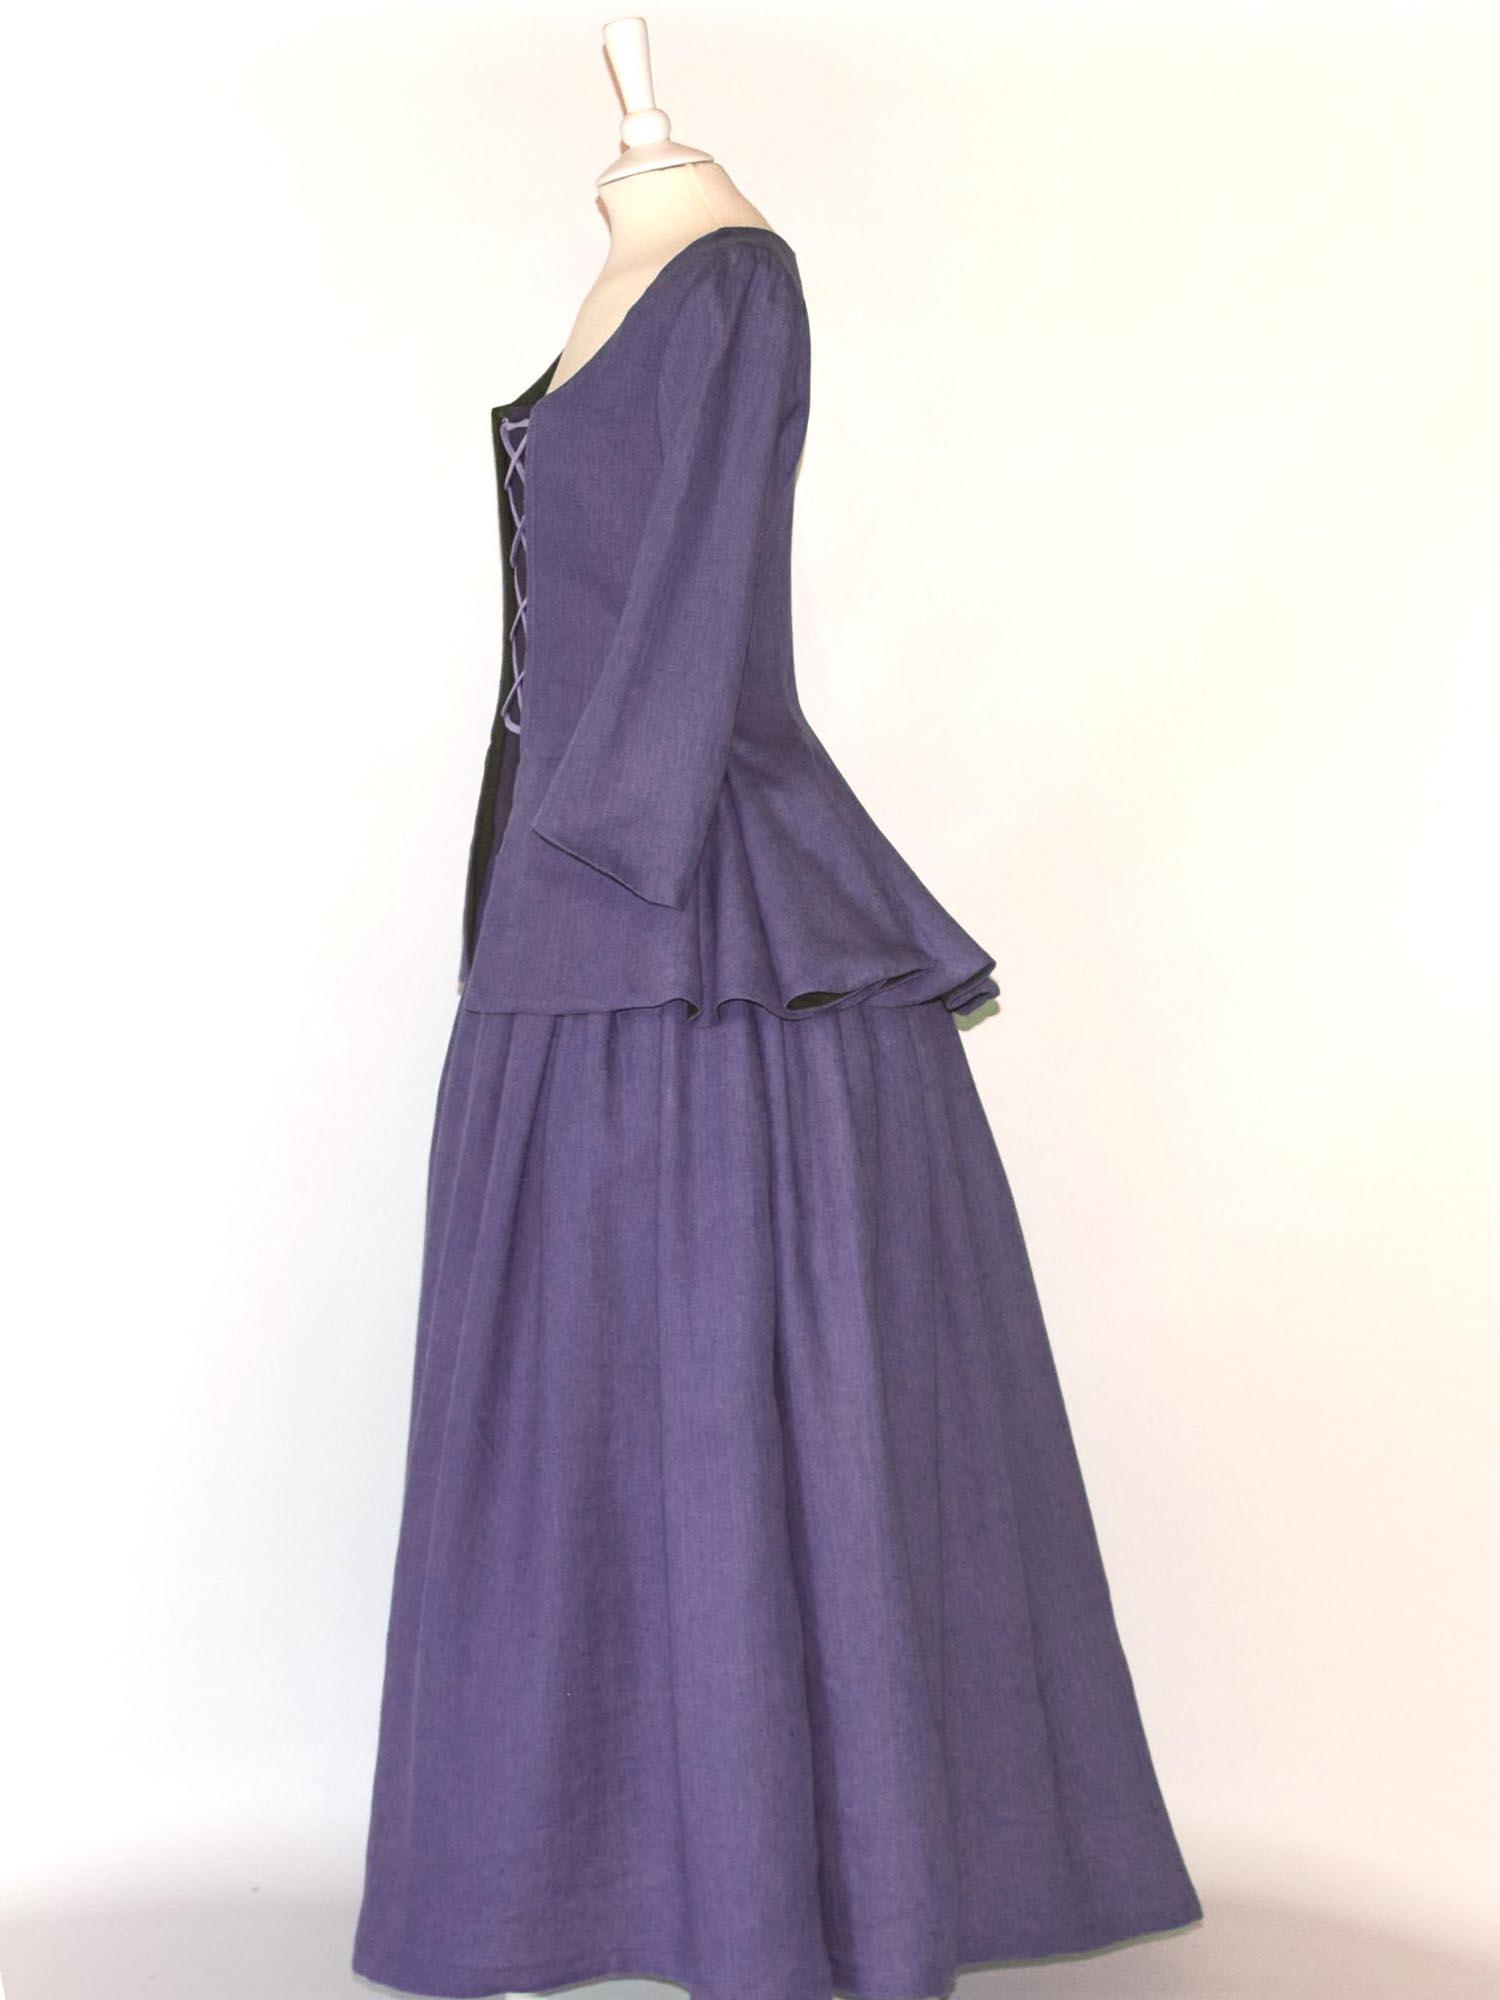 JANET, Colonial Costume in Plum Purple Linen - Atelier Serraspina